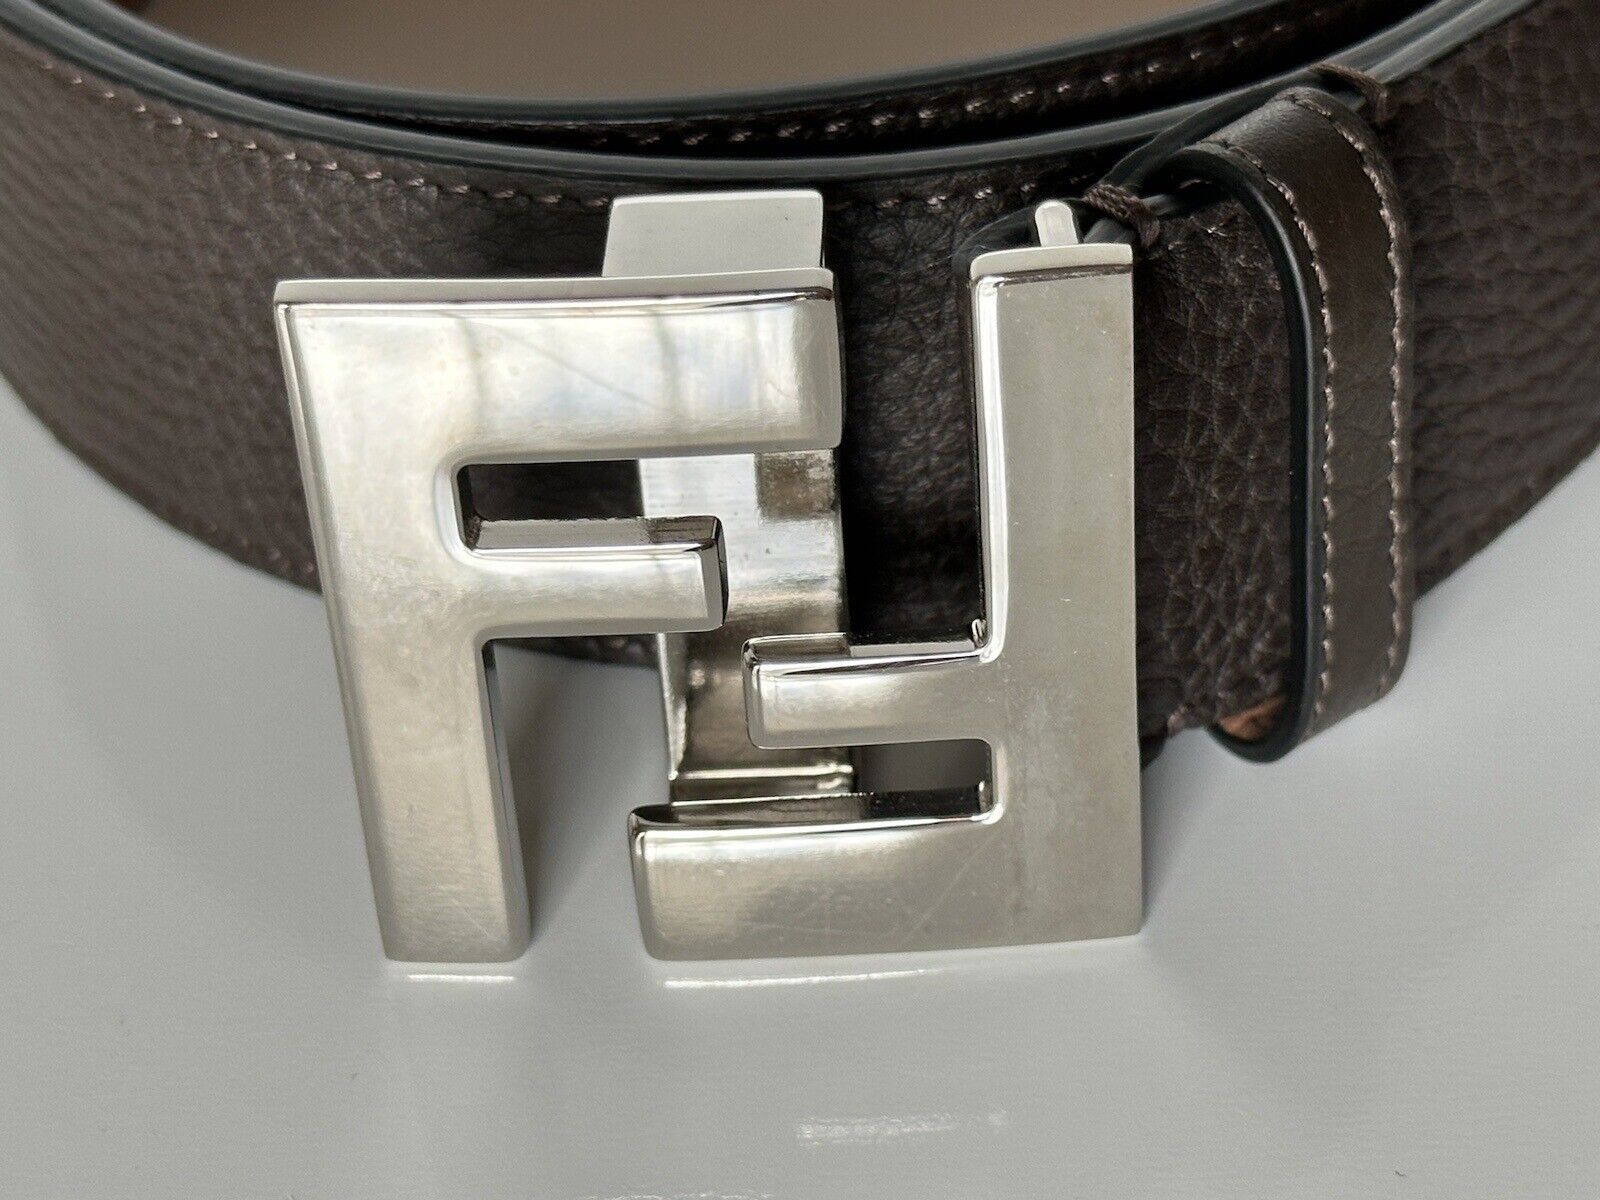 NWT $550 Fendi FF Calf Leather Brown Belt 110/44 Italy 7C0403